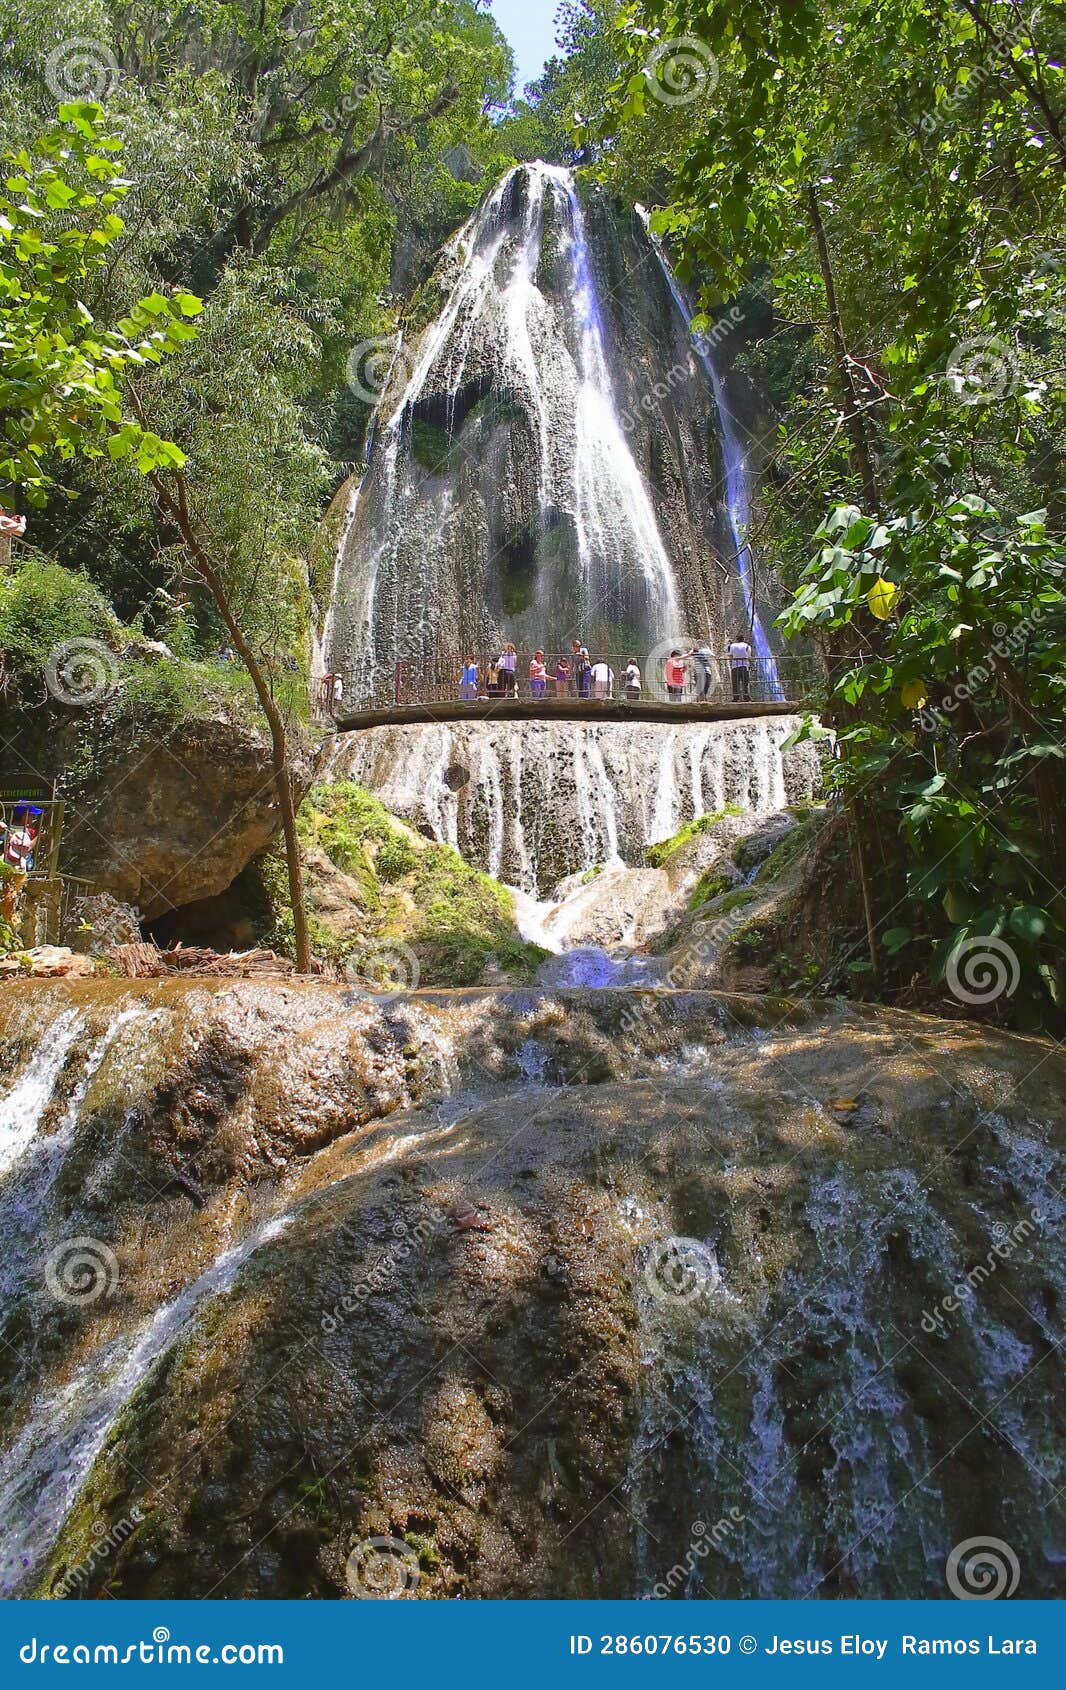 waterfall cola de caballo in monterrey nuevo leon, mexico. iii